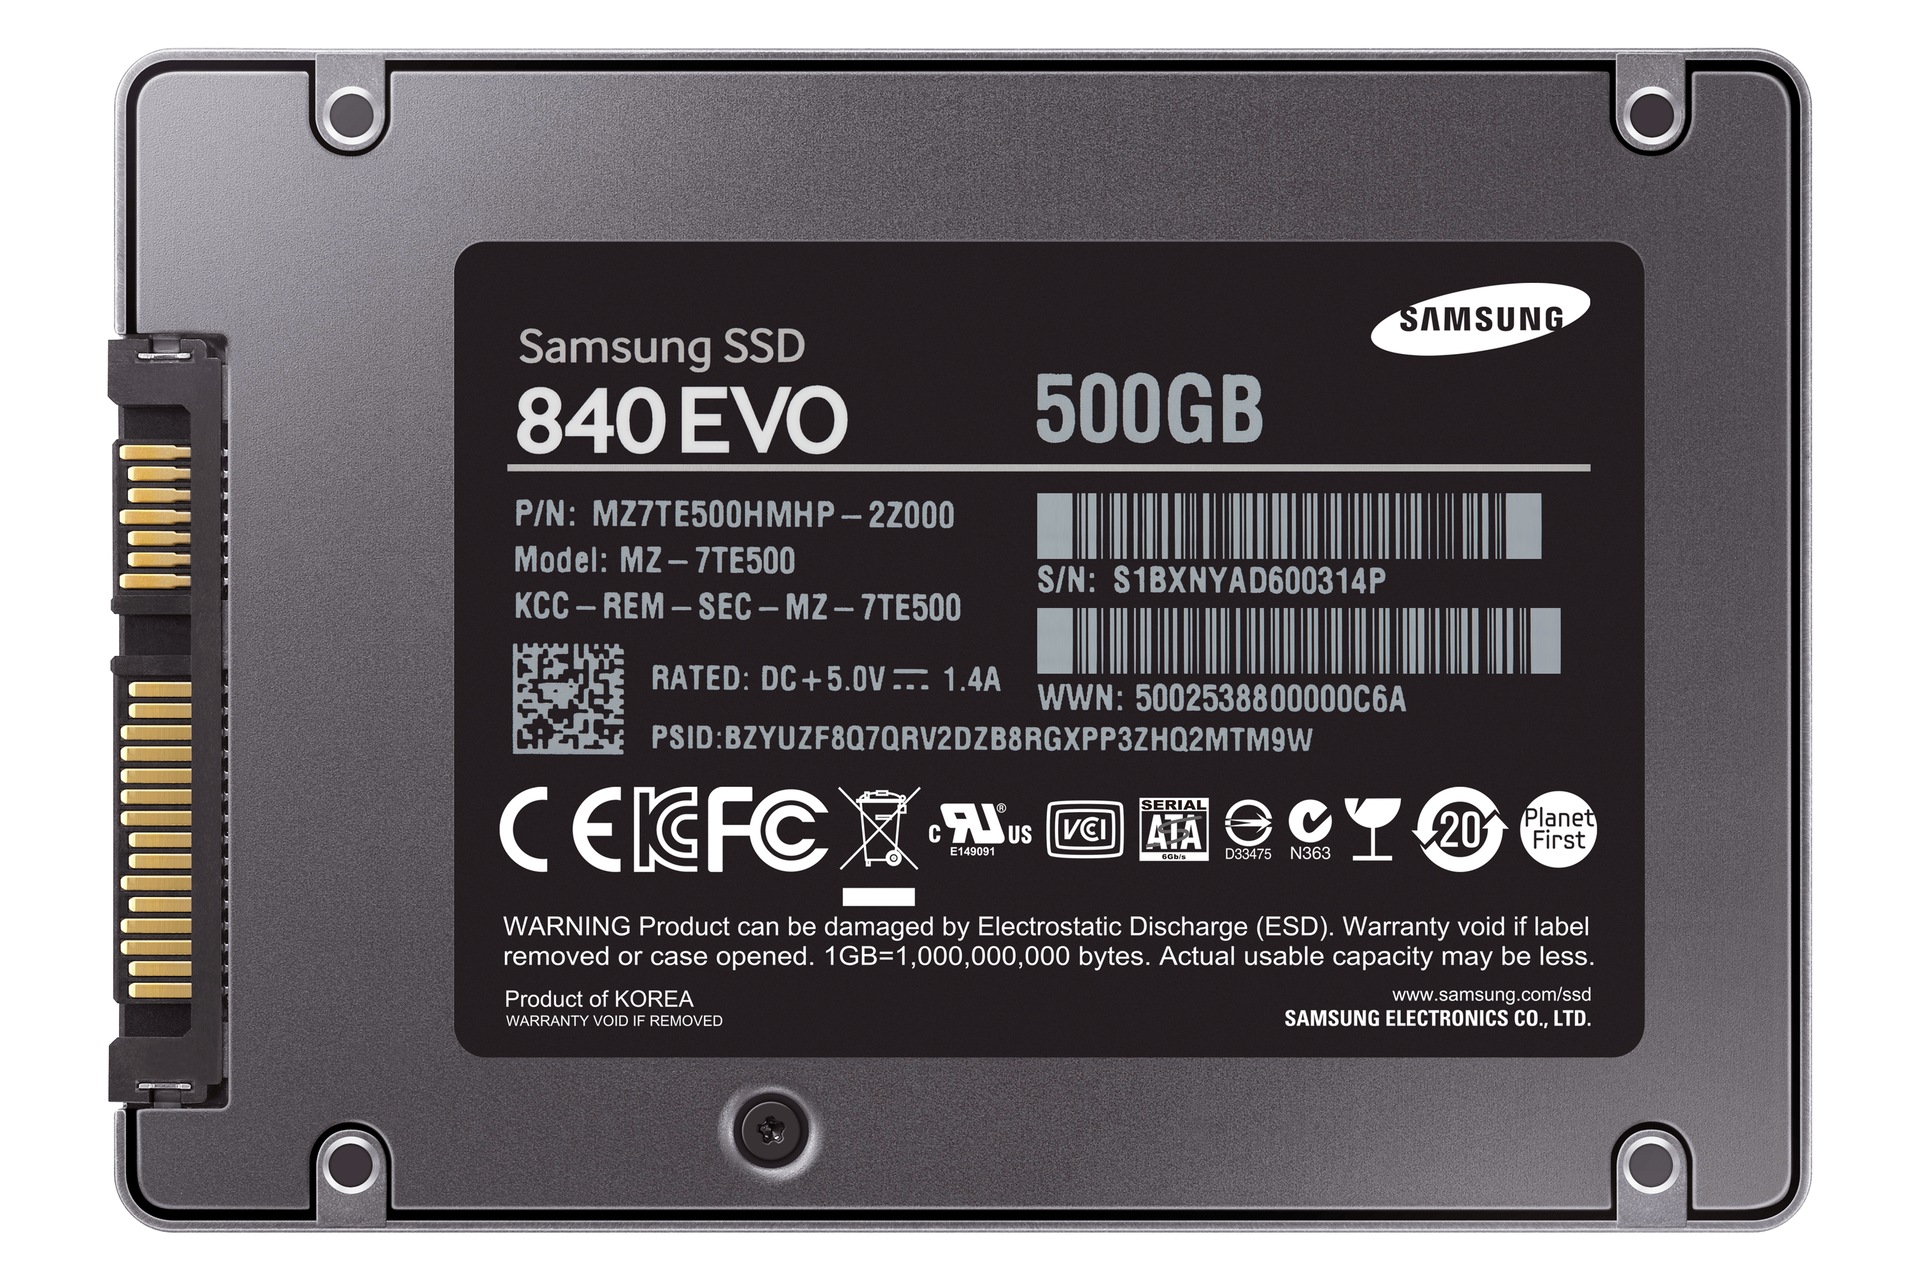 SSD 840 EVO - 500GB 2.5-inch MZ-7TE500BW | Samsung SSD